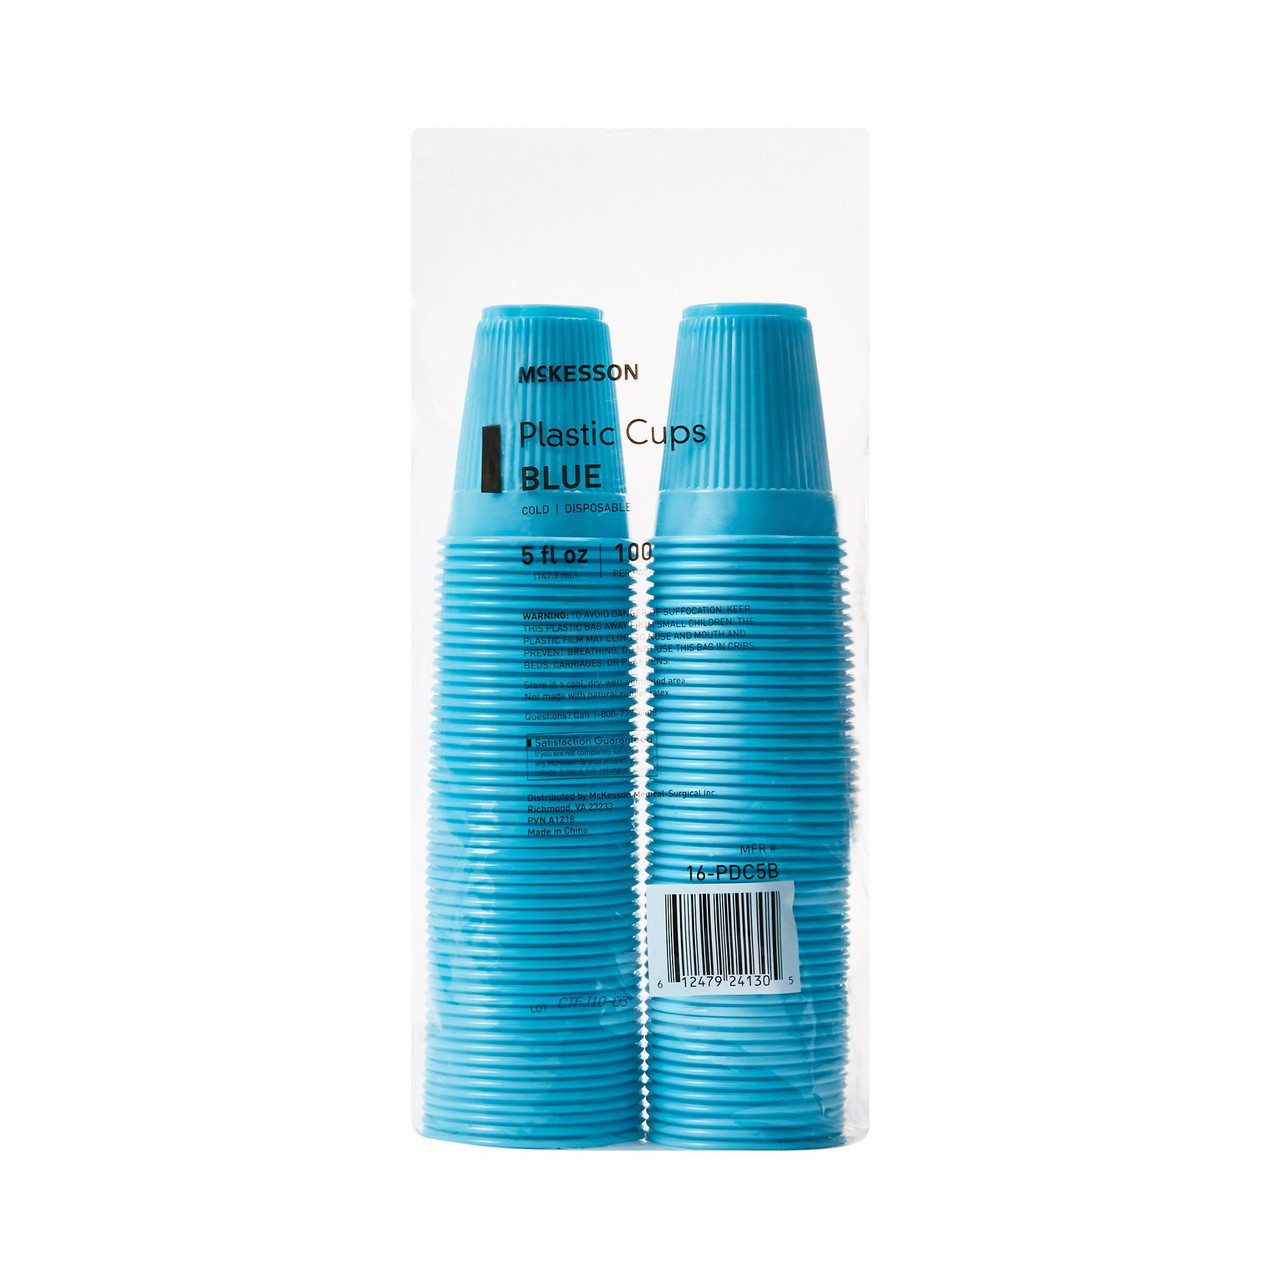 McKesson Plastic Cups, Disposable - Blue, 5 oz